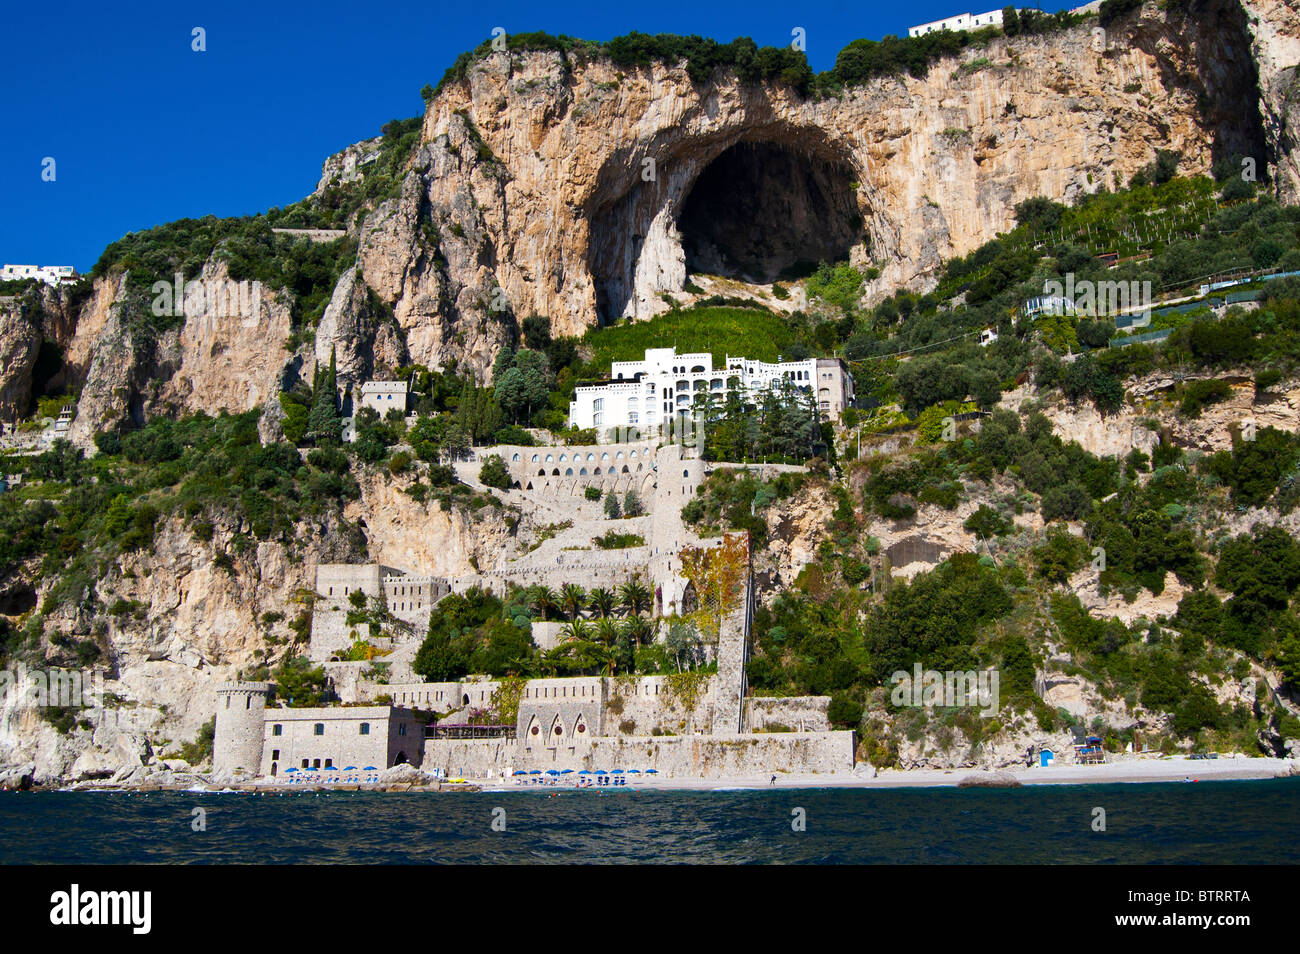 Saraceno Hotel Riviera napolitaine Positano, Amalfi Coast, Italie Banque D'Images